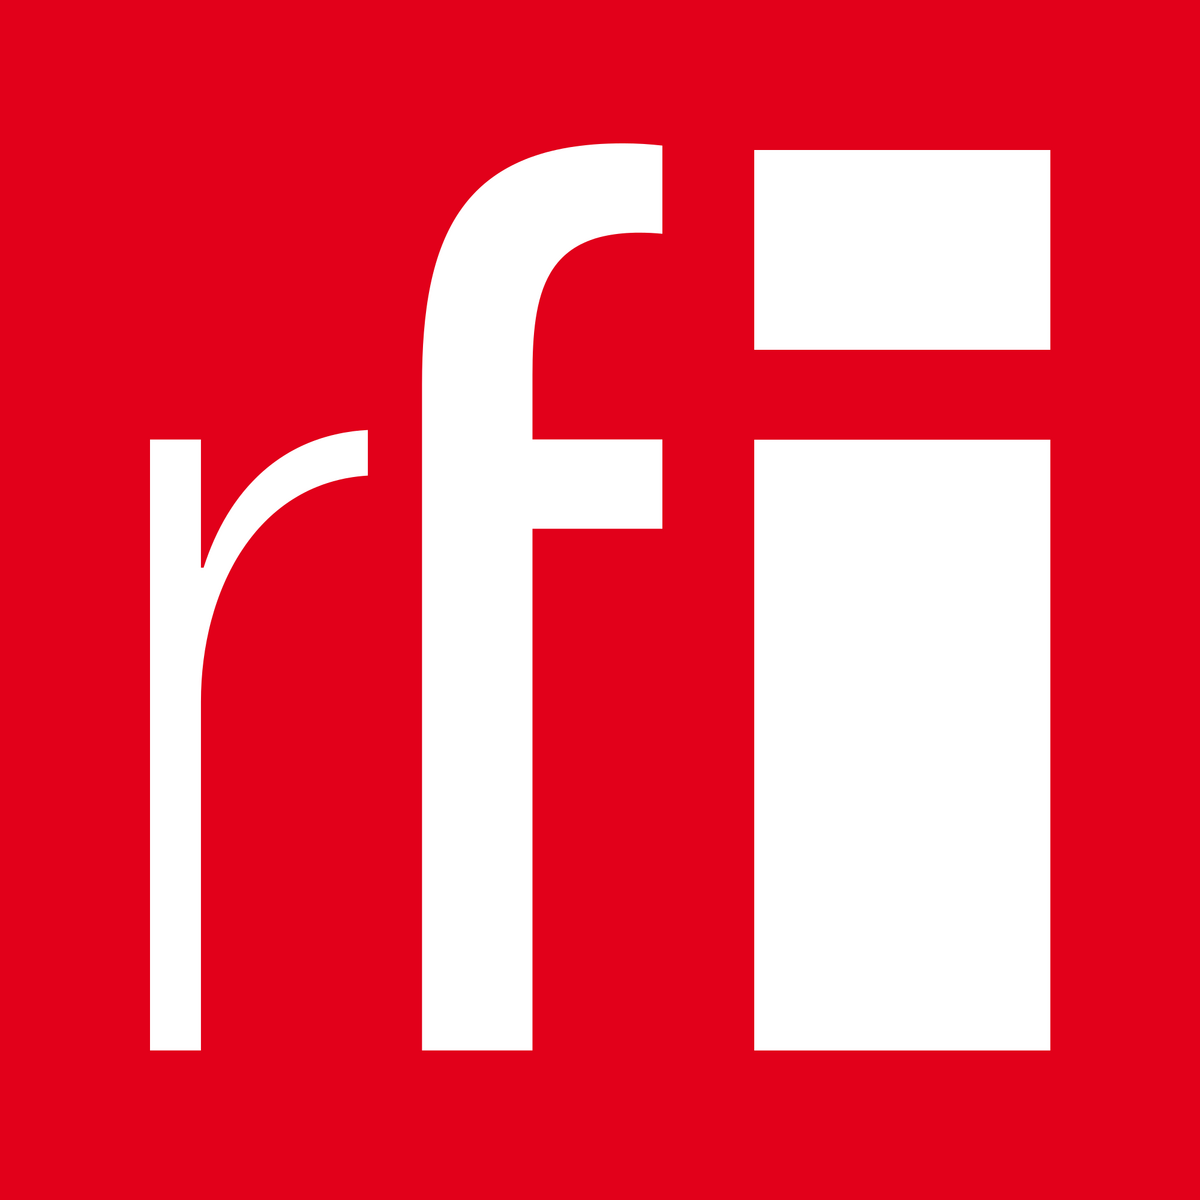 RFI Musique - - Profile - Marie France, underground icon